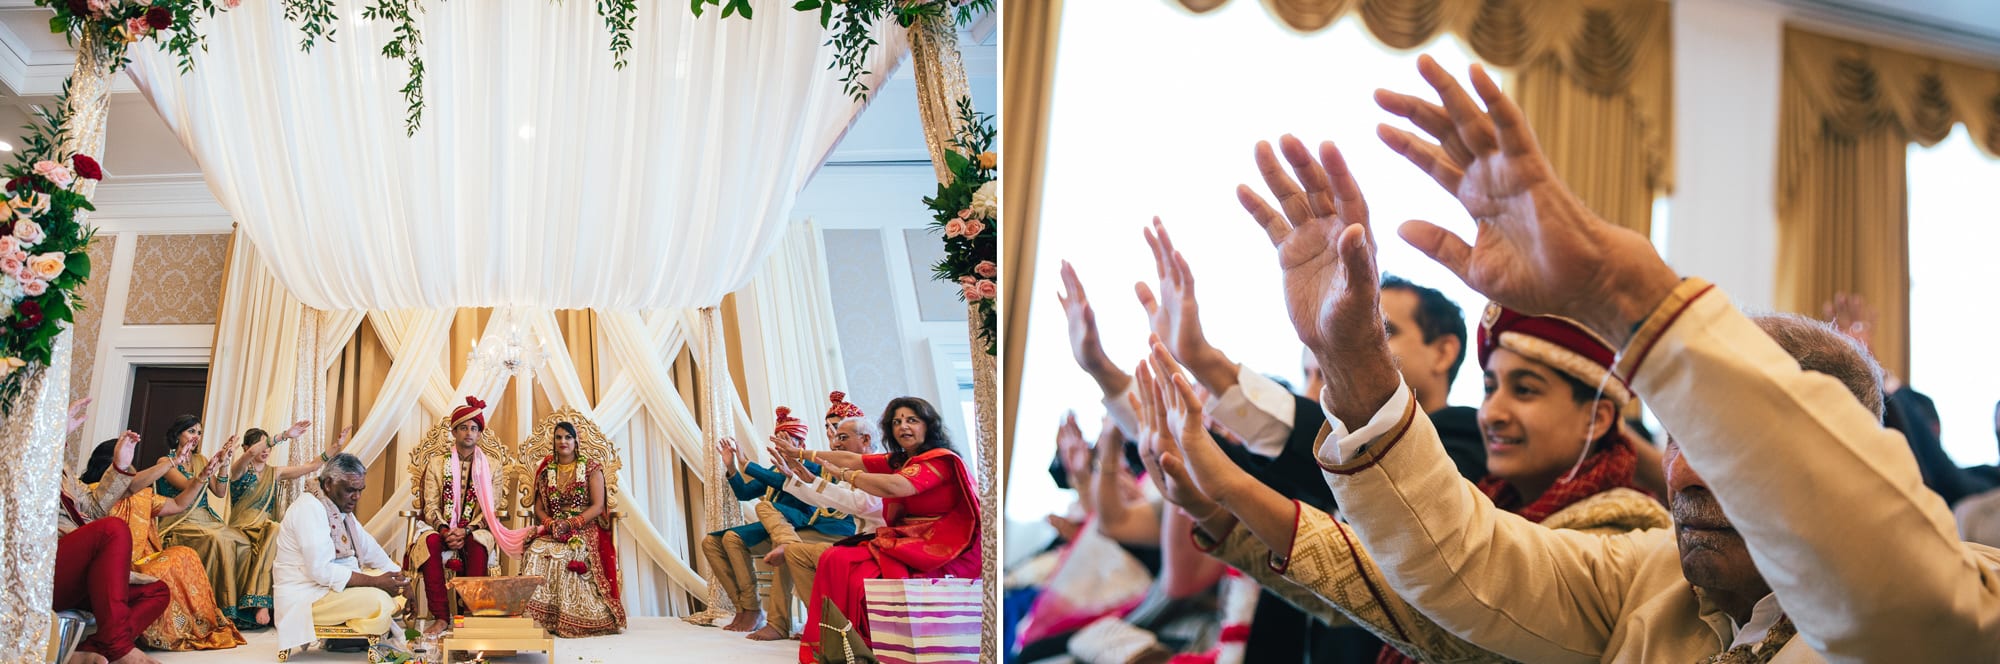 Traditional Indian wedding ceremony